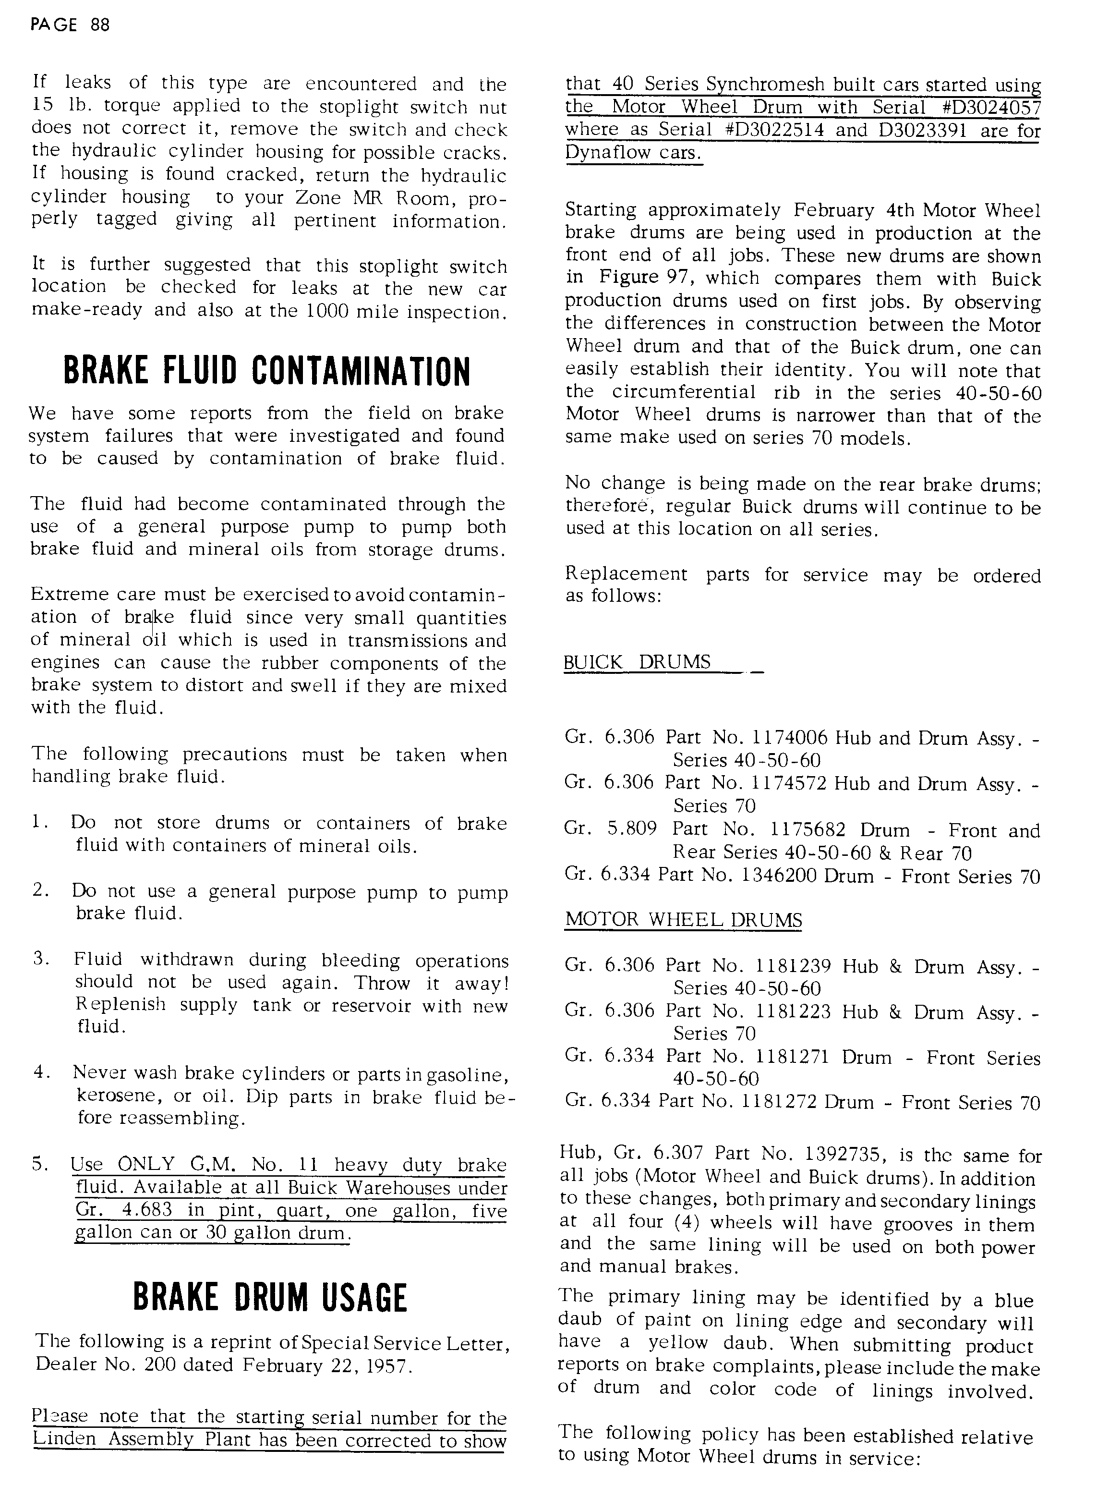 n_1957 Buick Product Service  Bulletins-092-092.jpg